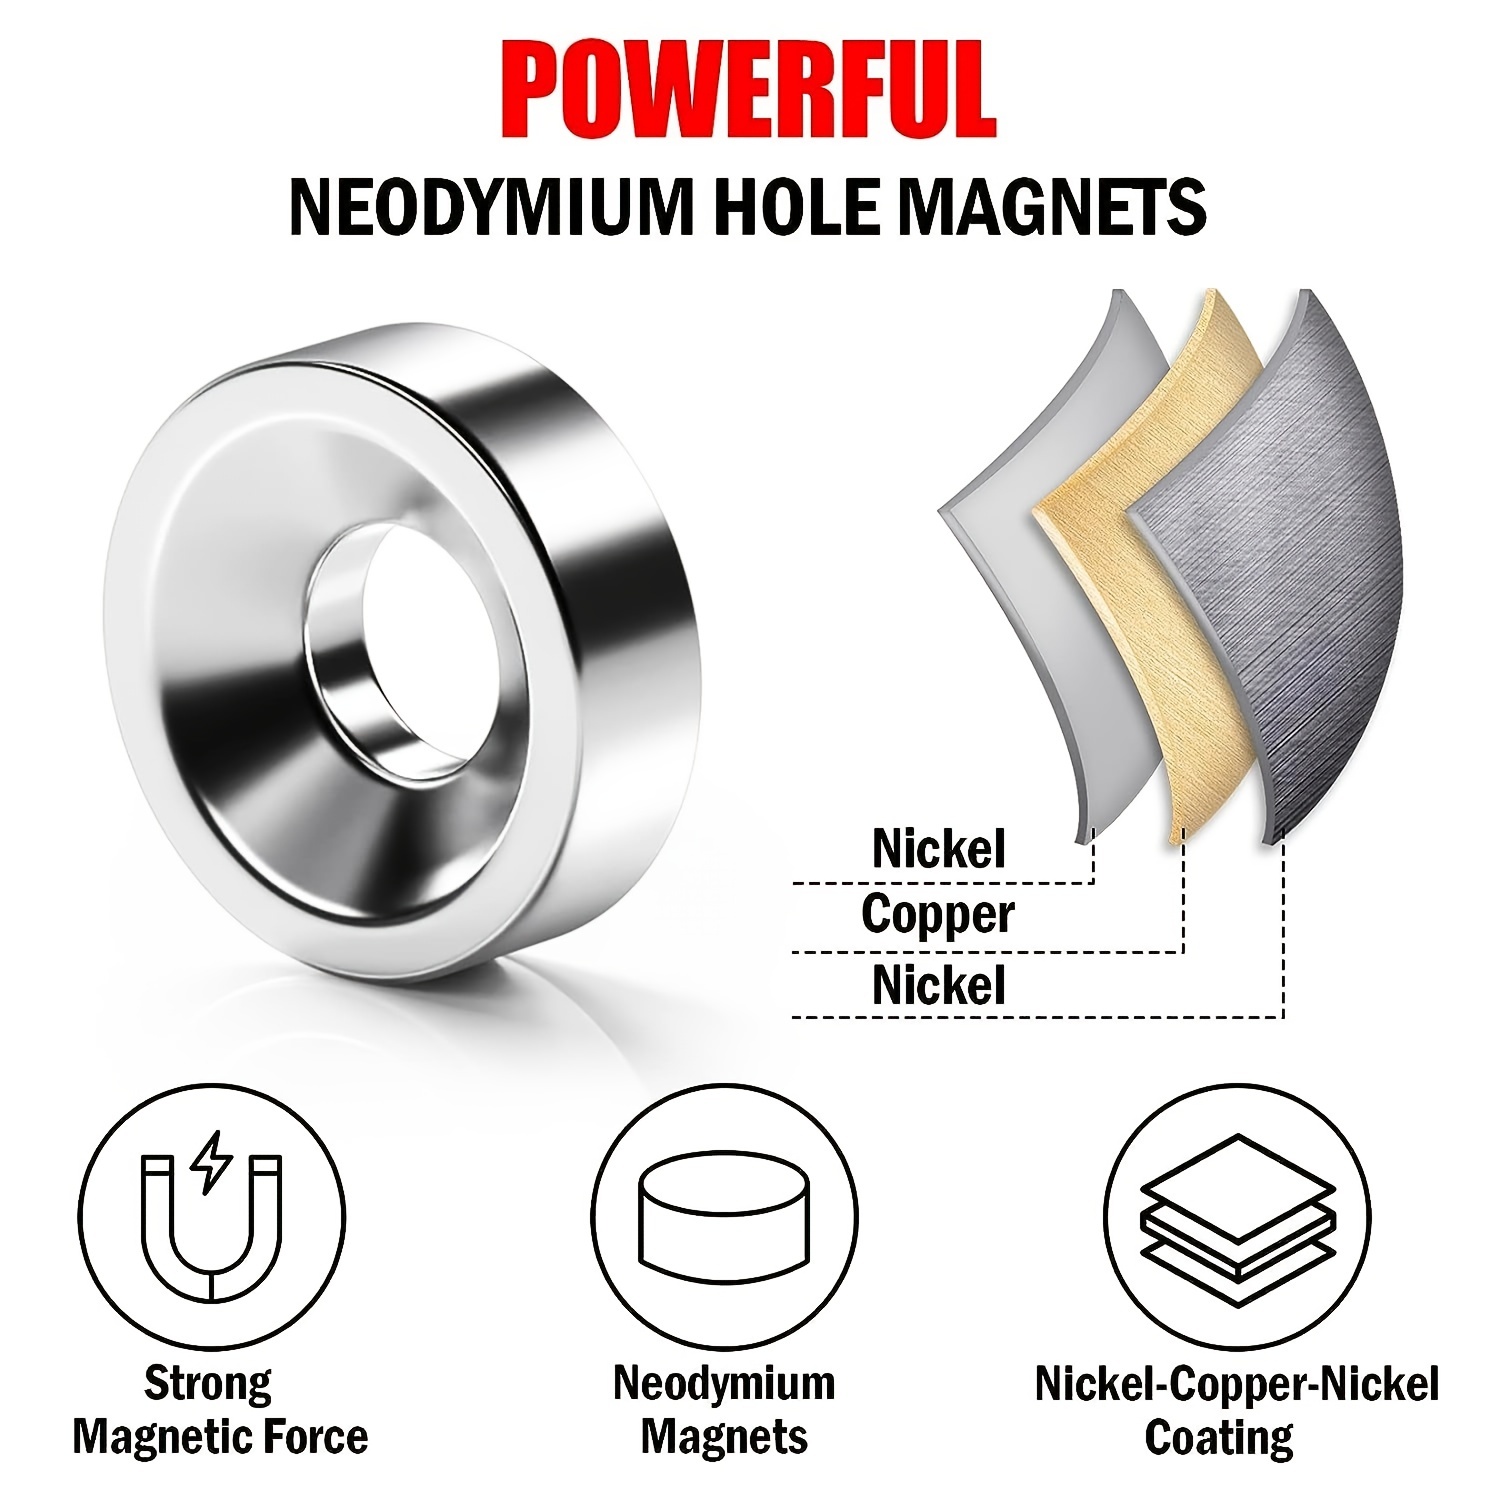 Disc Neodymium Magnets 10mm dia x 2mm 12pcs/pack